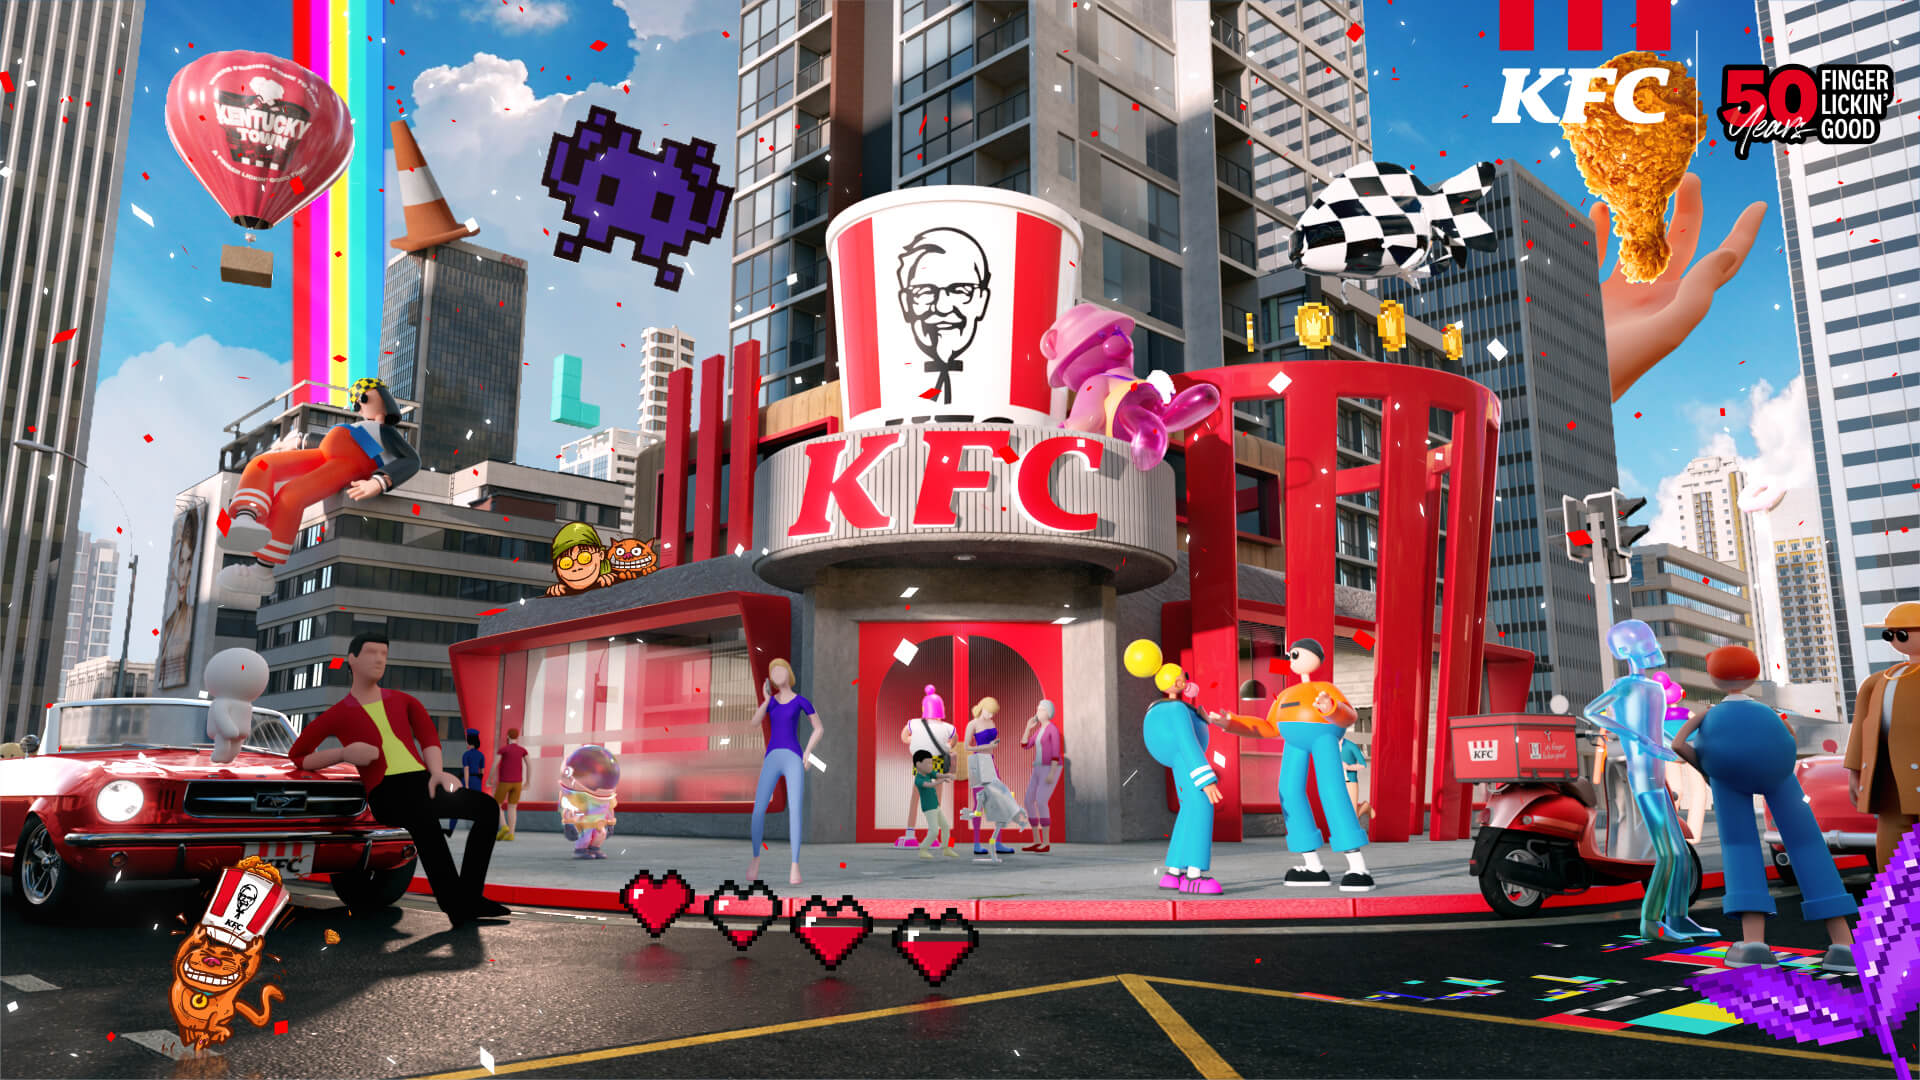 KFC Chinook Center, More about Kentucky Fried Chicken - KFC…